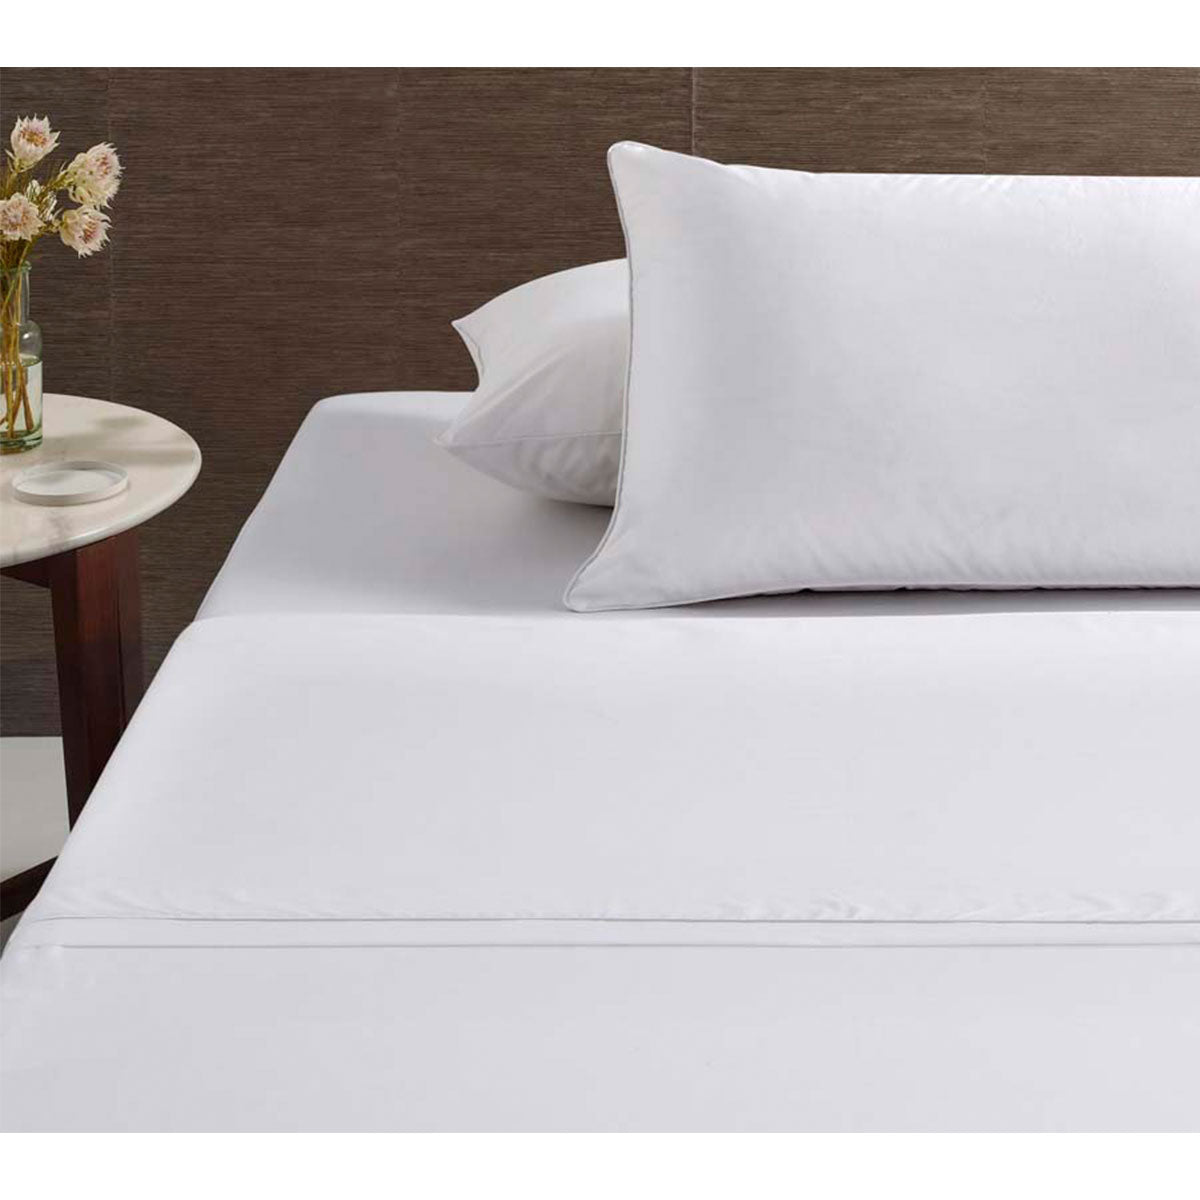 Accessorize White Piped Hotel Deluxe Cotton Sheet Set - Queen | Premium Bedding